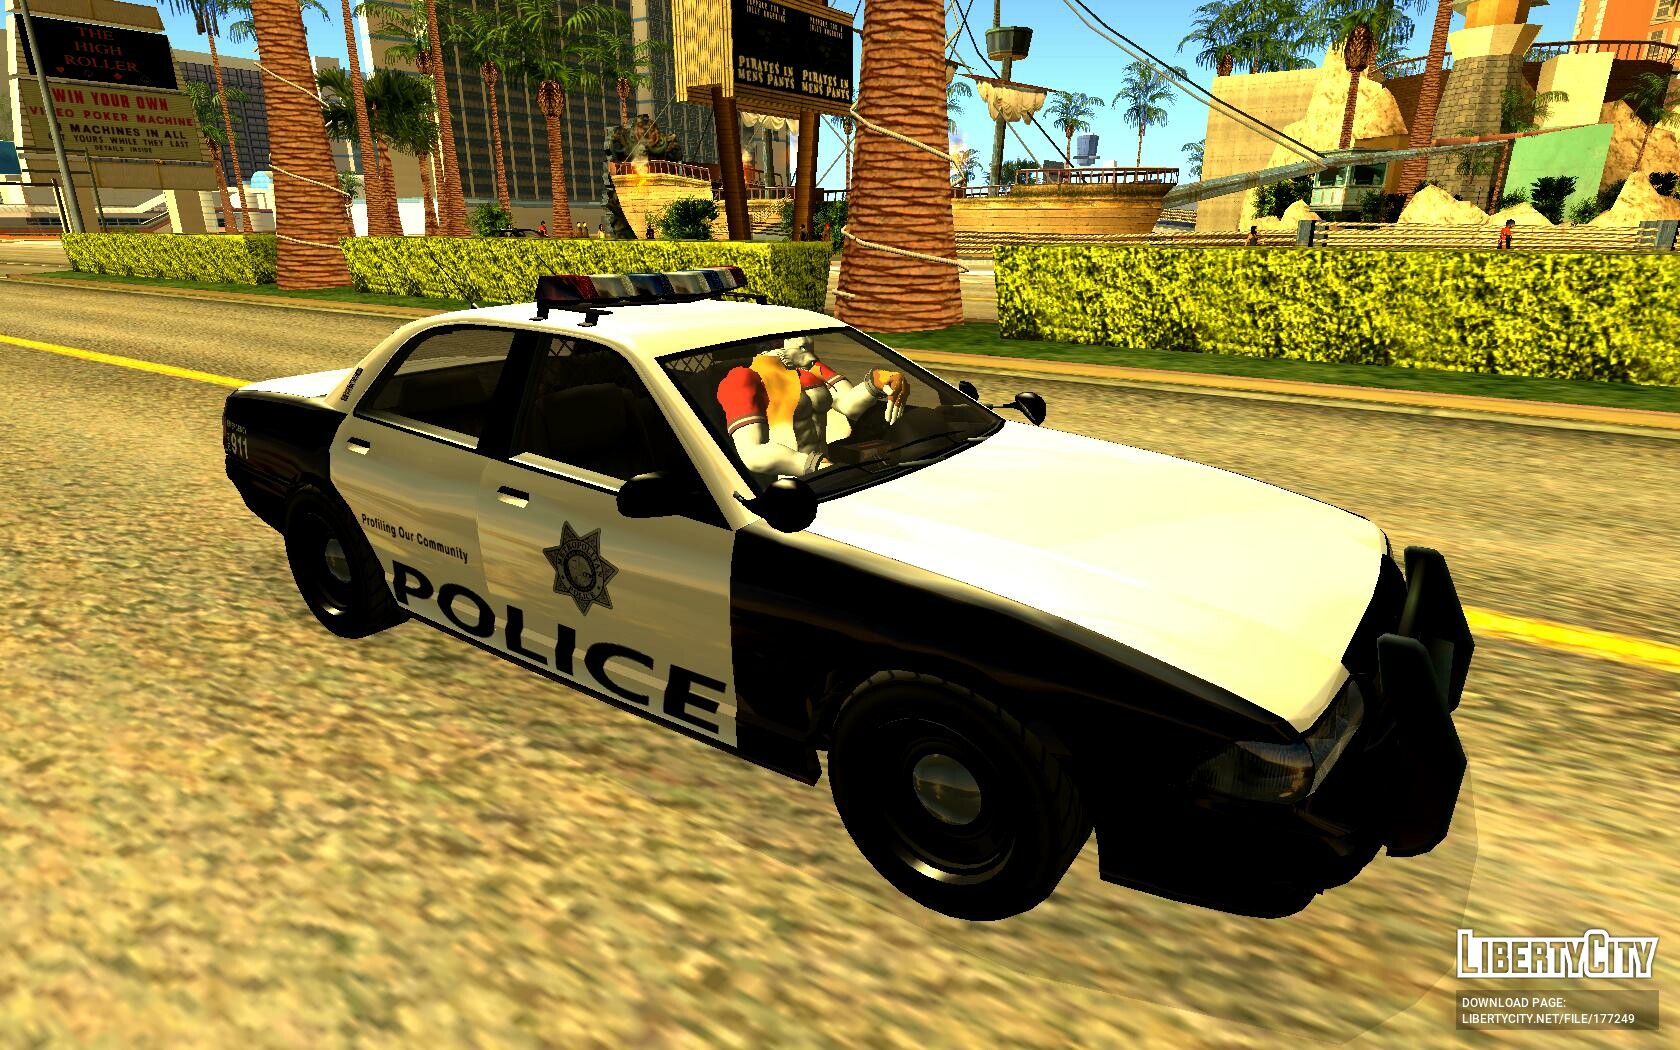 Gta sa полицейские. GTA 3 Police car. Полицейские машины в ГТА Сан андреас. Copcarru GTA sa. ГТА Сан андреас полиция.